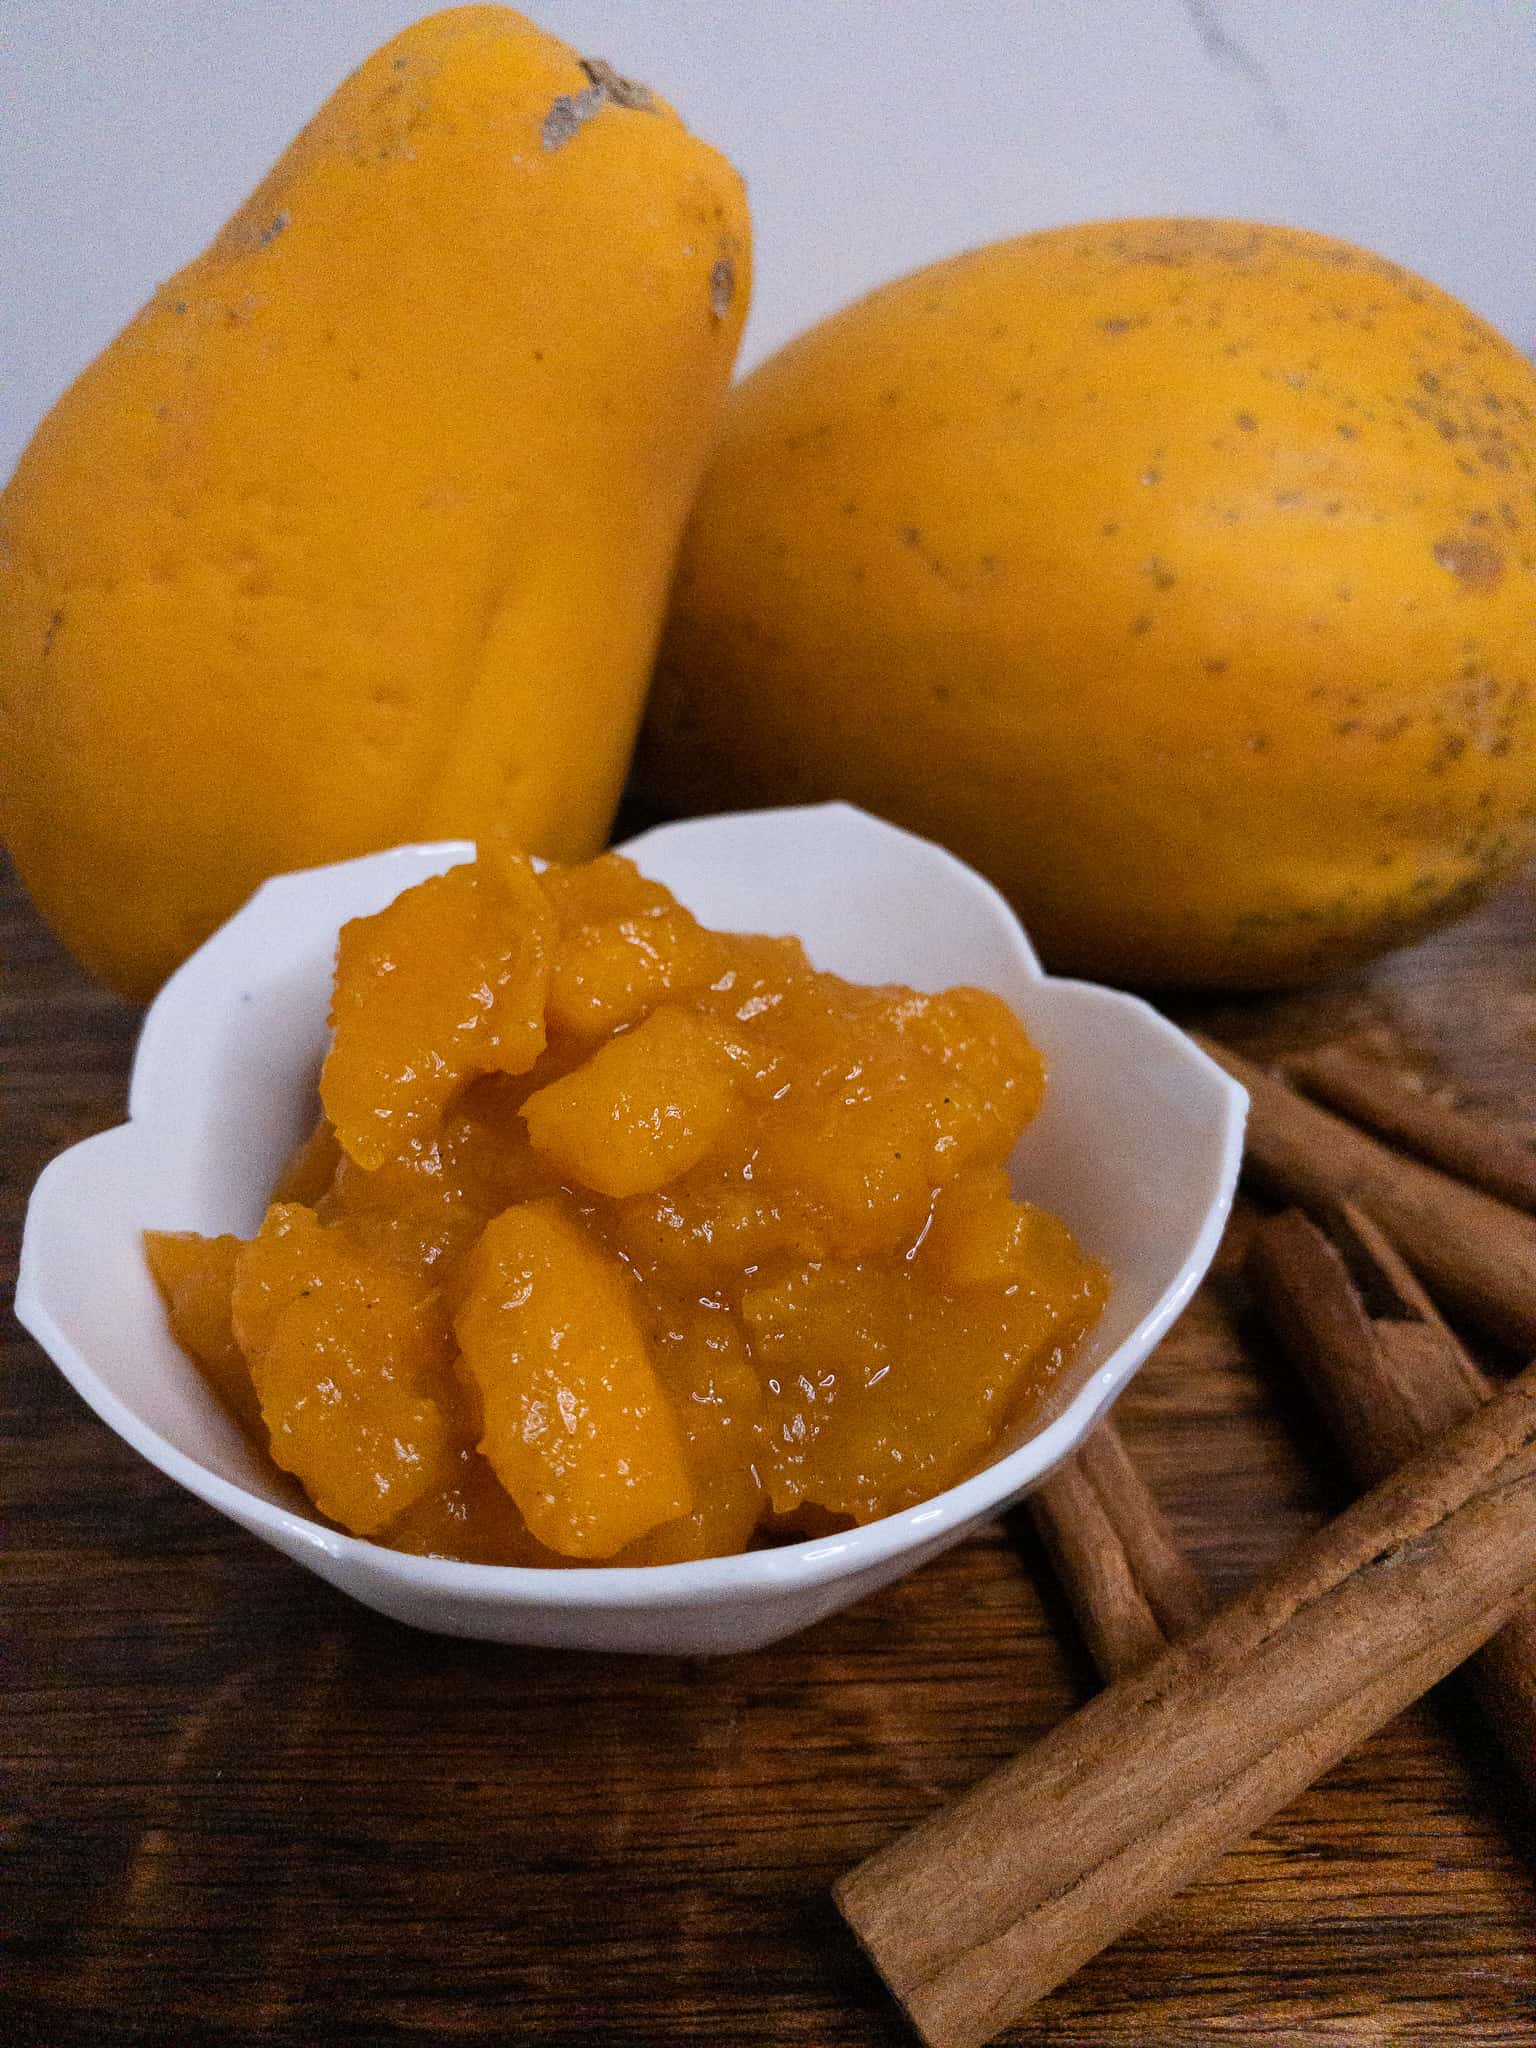 Spiced papaya compote with whole papaya and cinnamon sticks